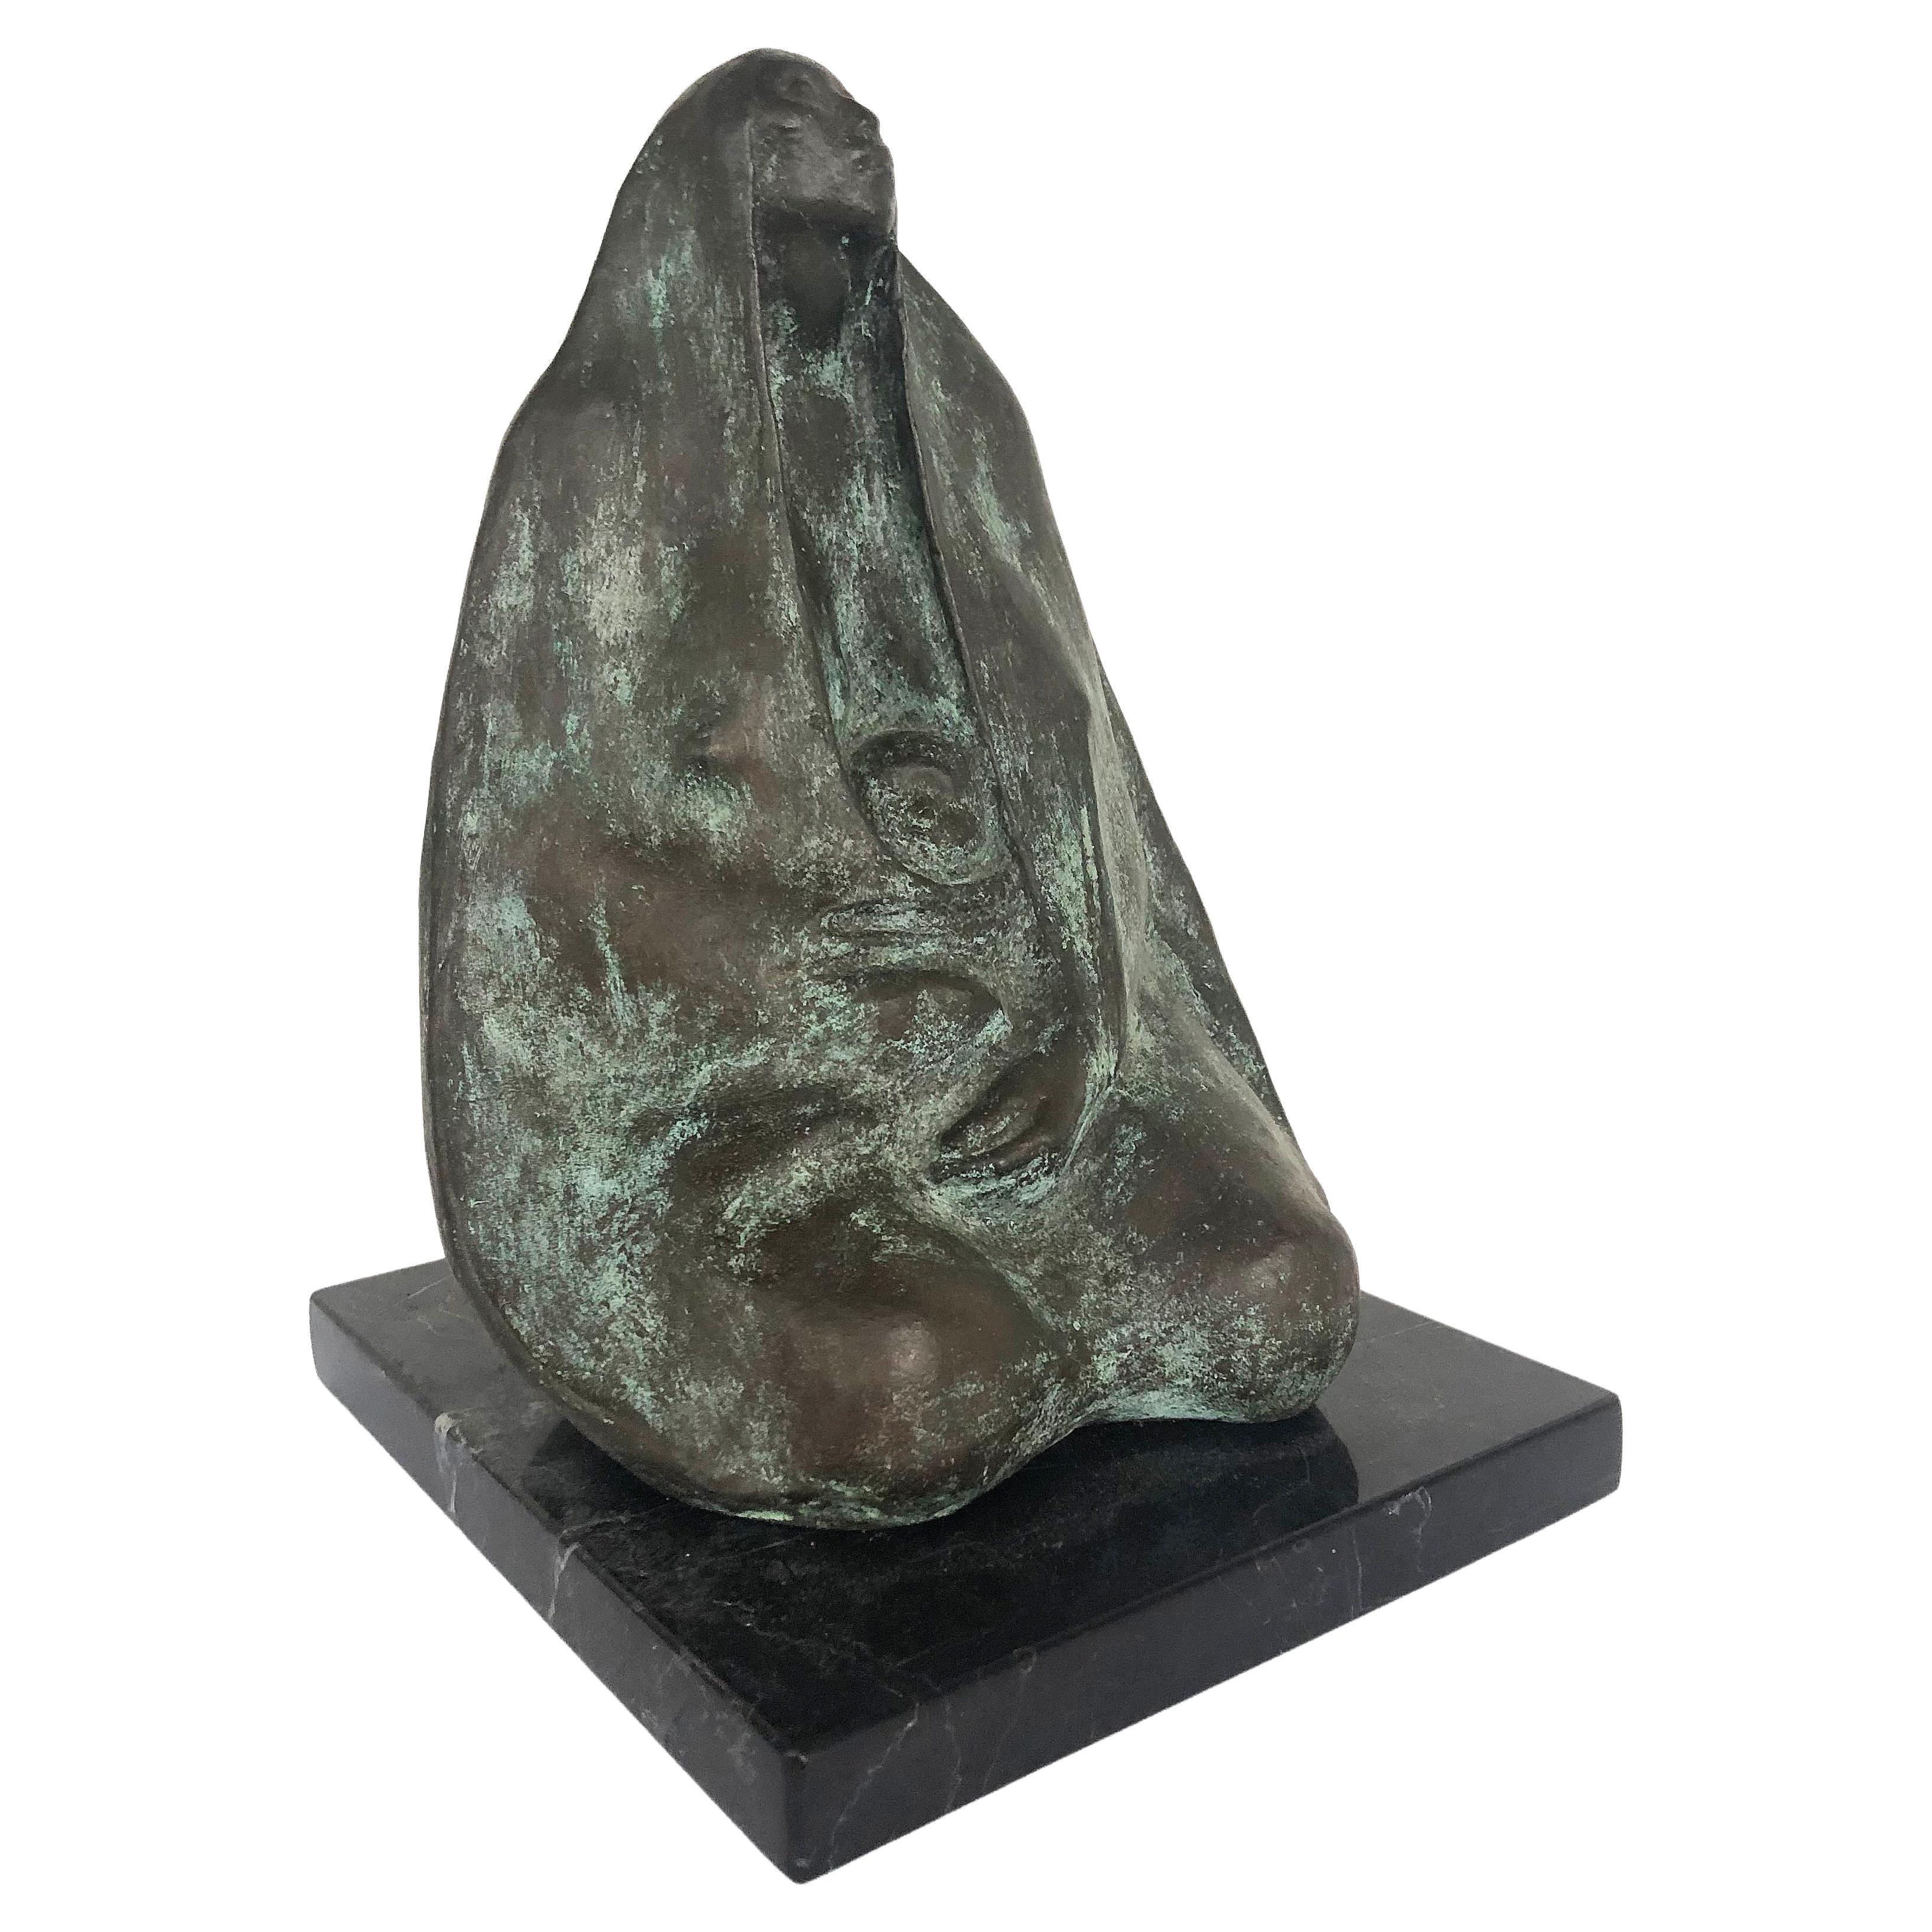 Francisco Ziga - Sculpture en bronze patiné sur socle en marbre